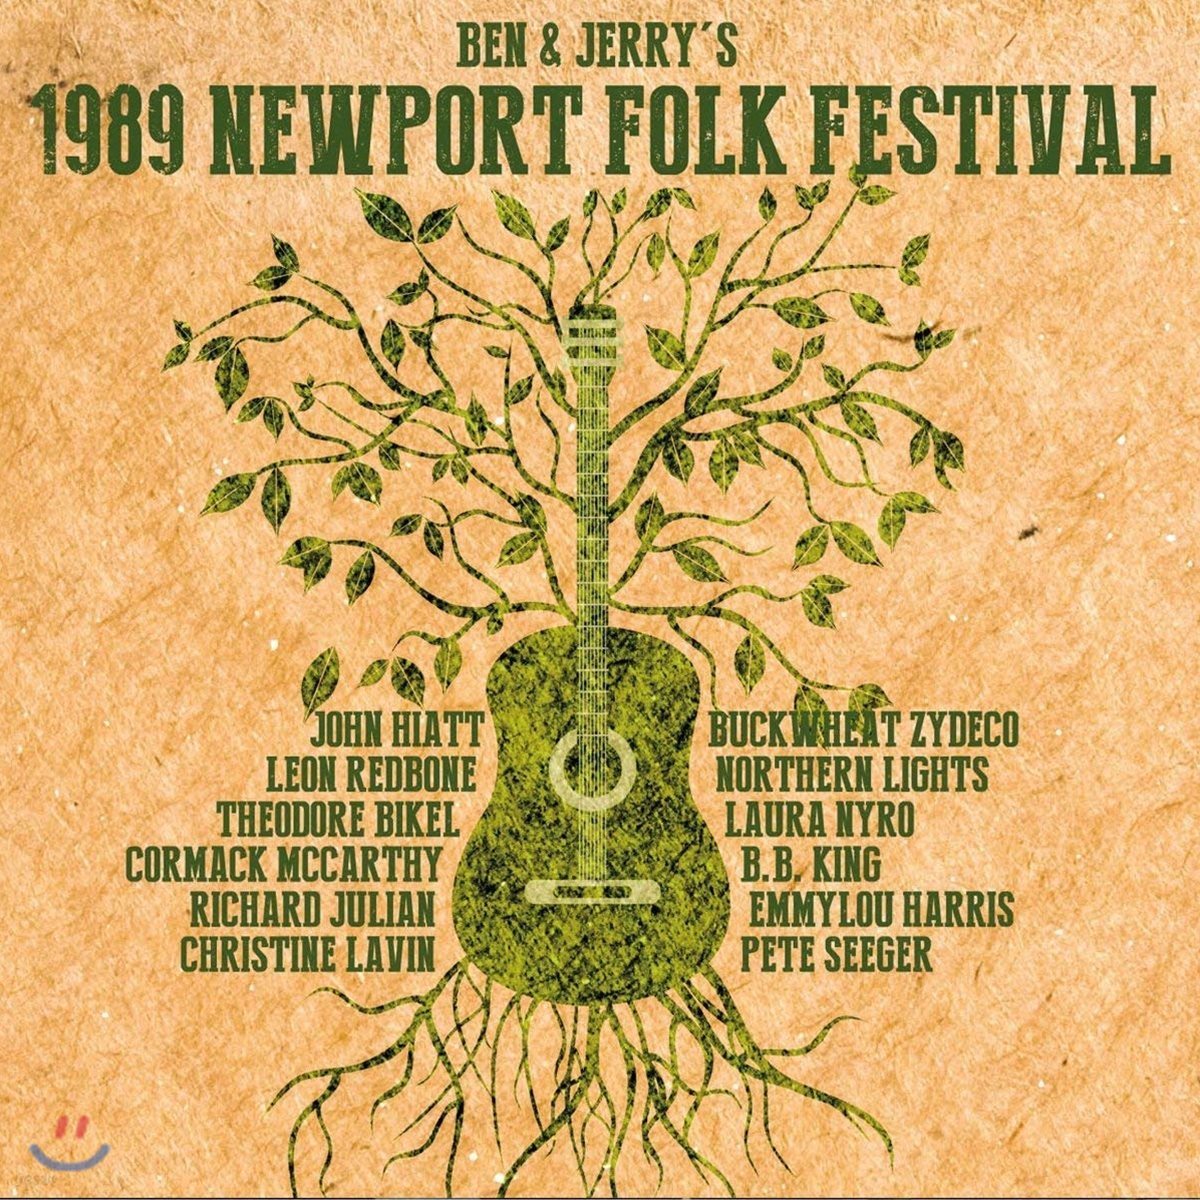 Newport Folk Festival 1989 (1989년 뉴포트 포크 페스티벌 실황)